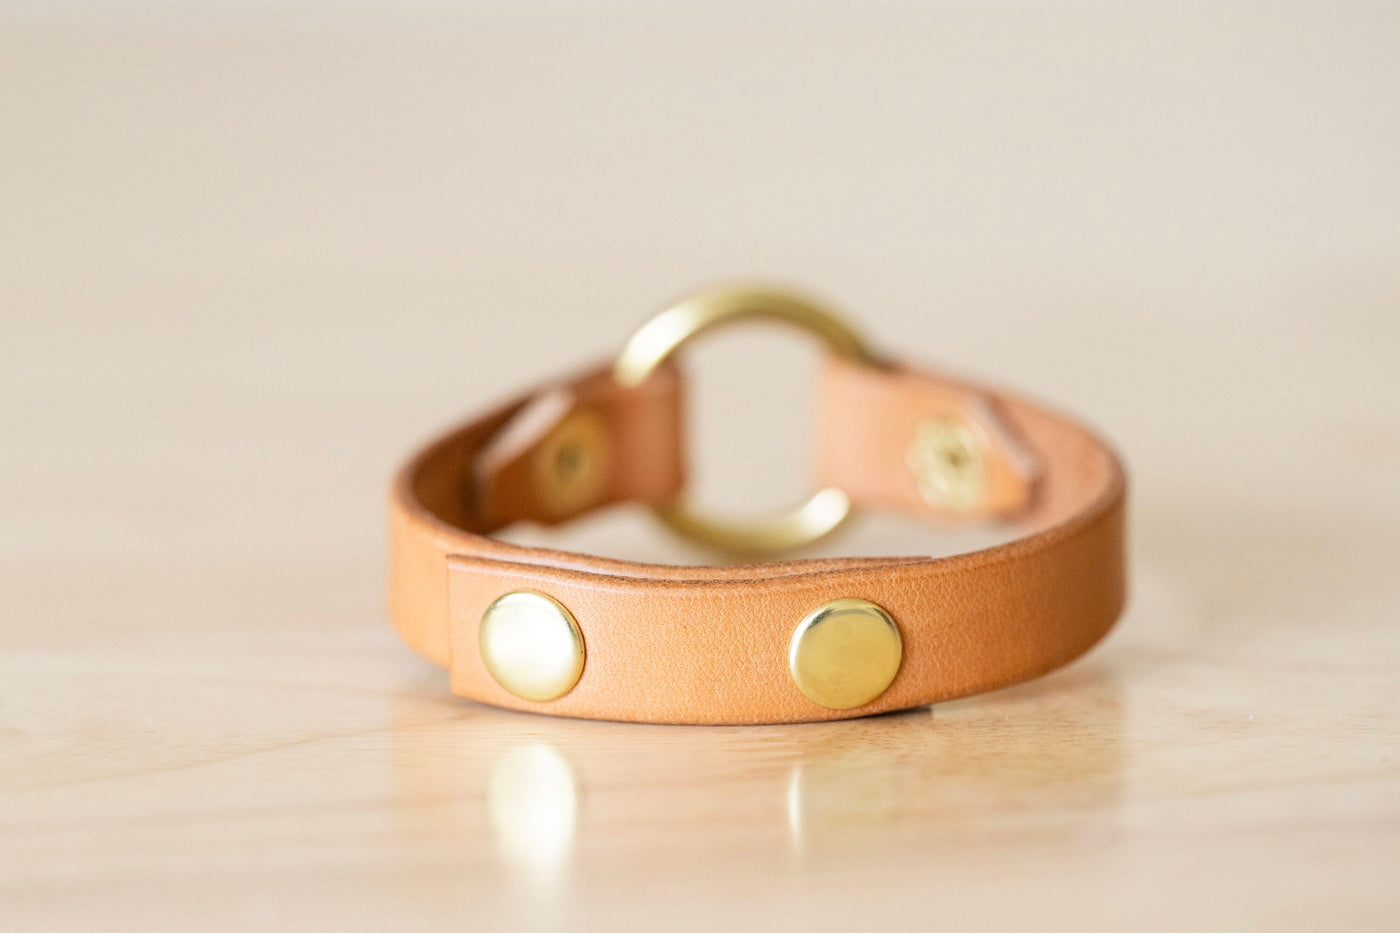 Leather Ring Bracelet - Wedding Ring Bracelet - Walnut + Antique Brass - Grief Memory Wedding Band Bracelet - Wear The Ring